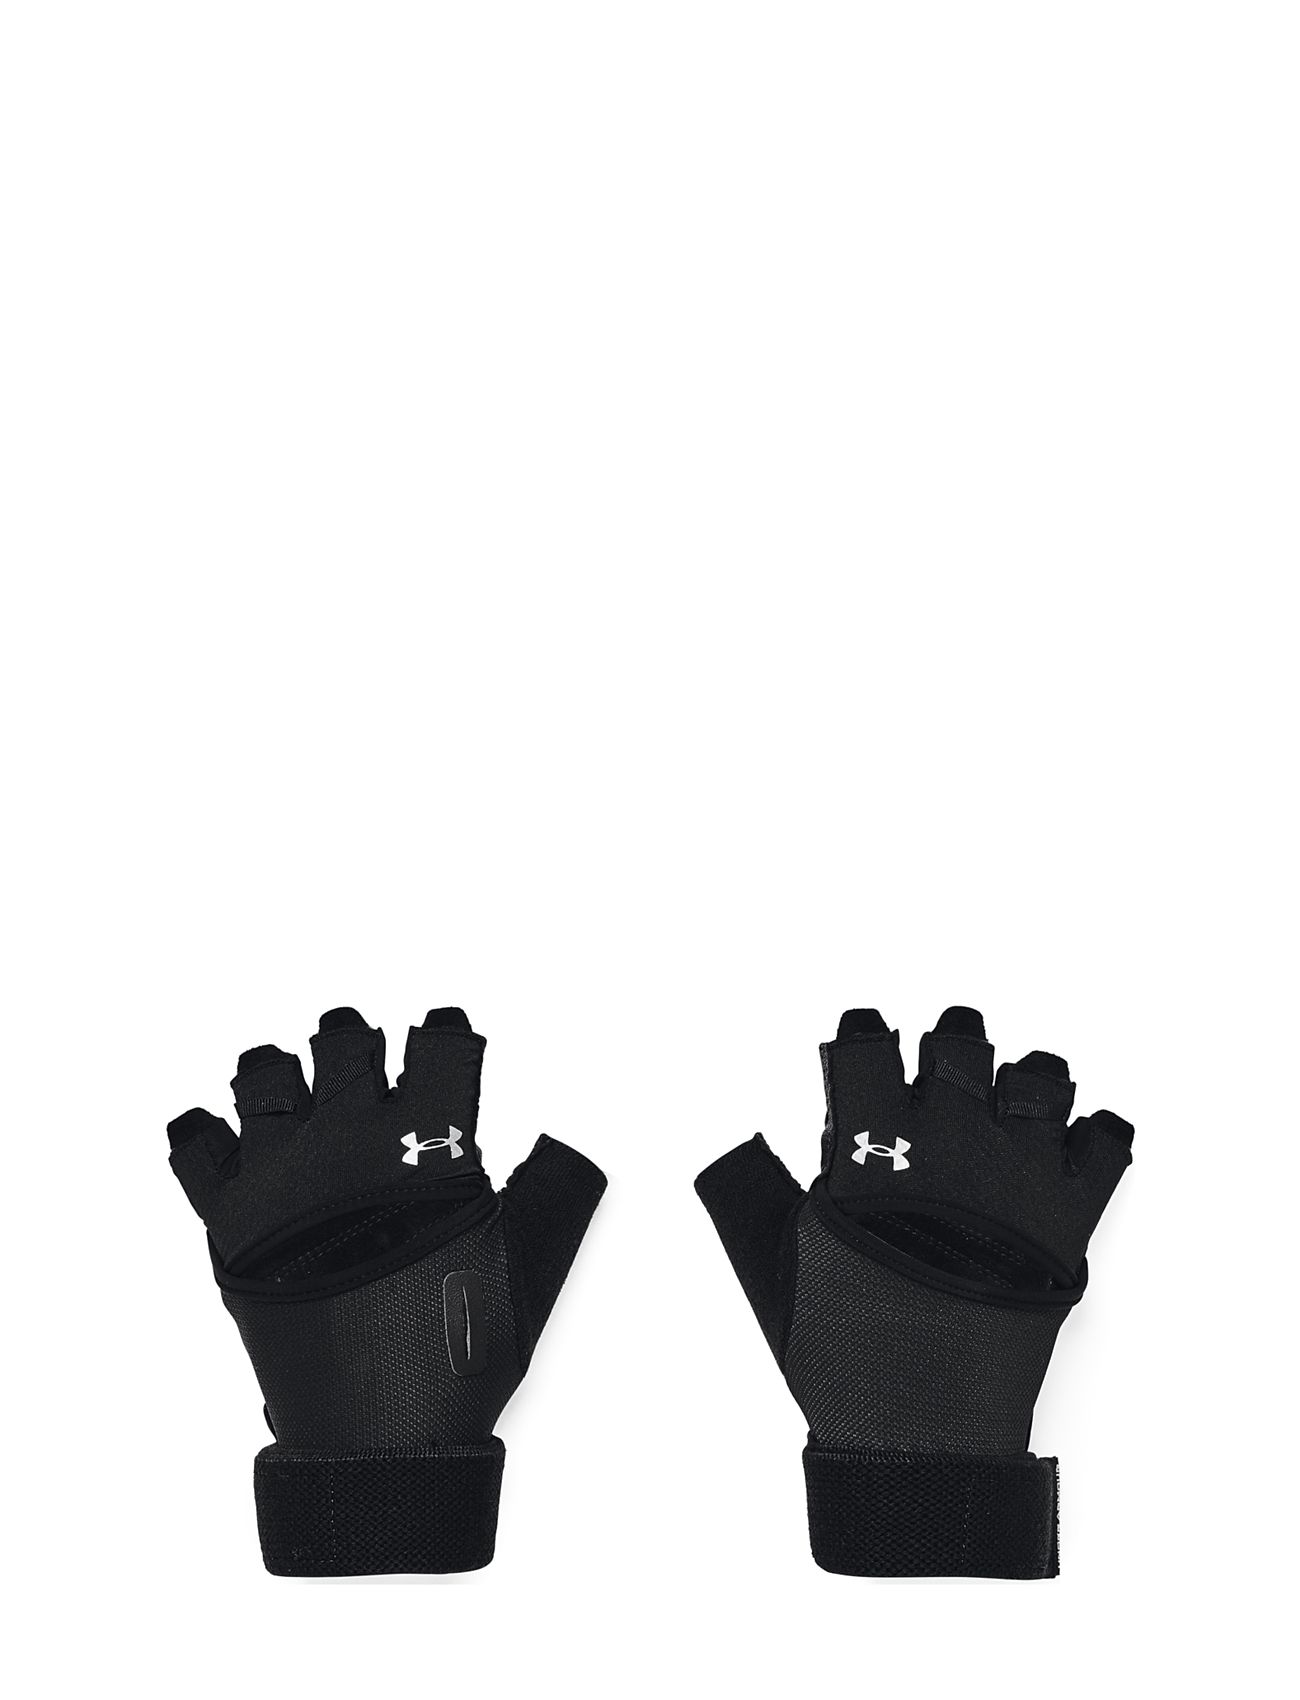 Under Armour W's Weightlifting Gloves - Gloves